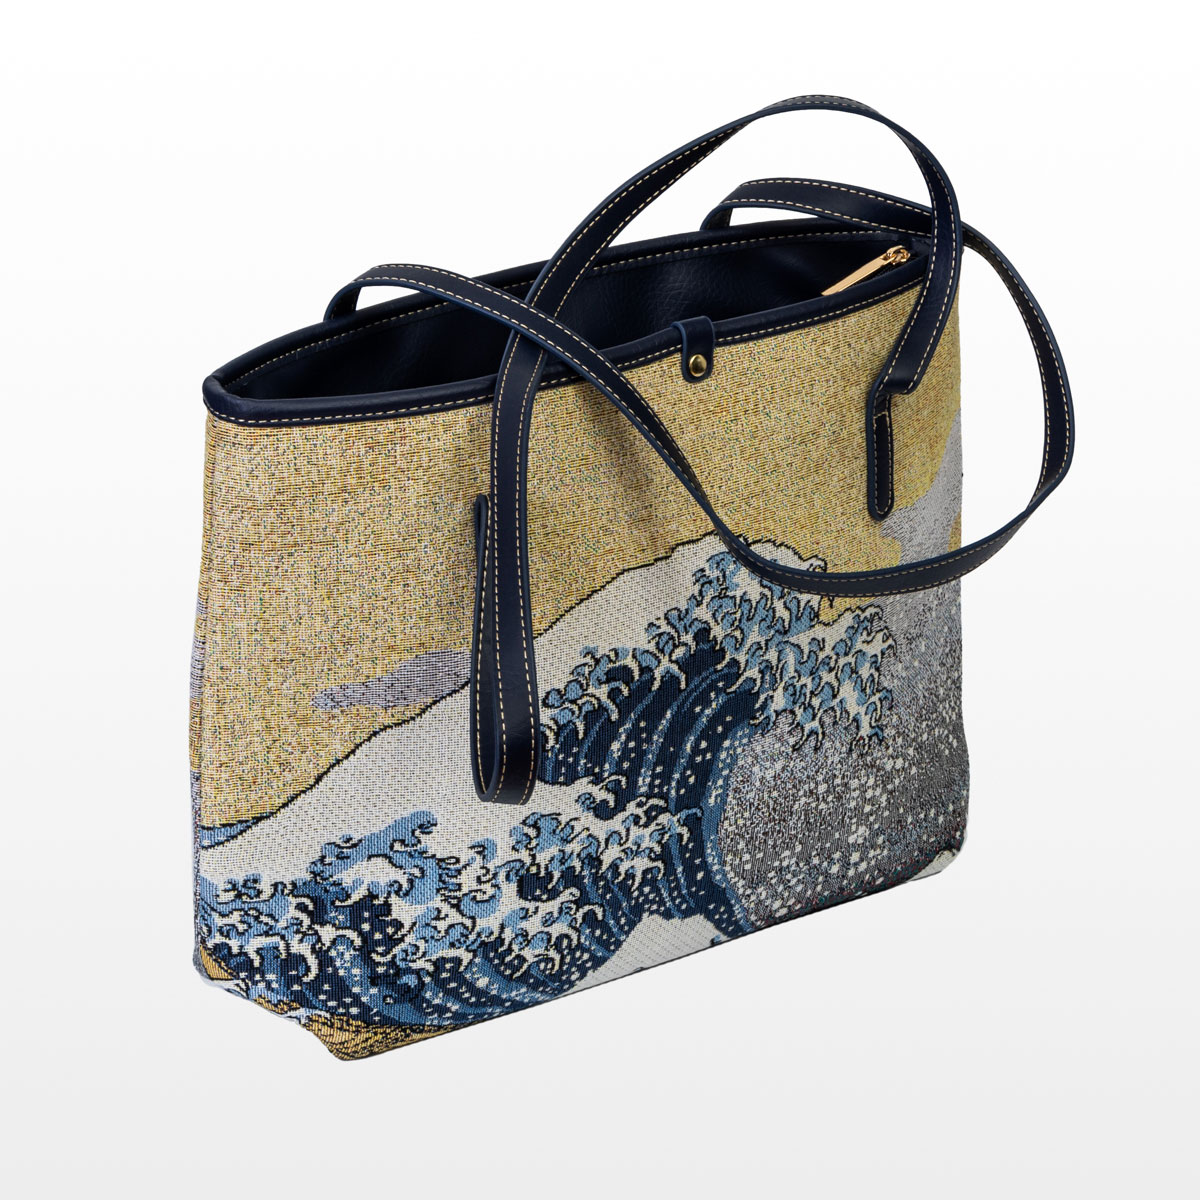 Hokusai handbag - The Great Wave of Kanagawa (detail n°1)